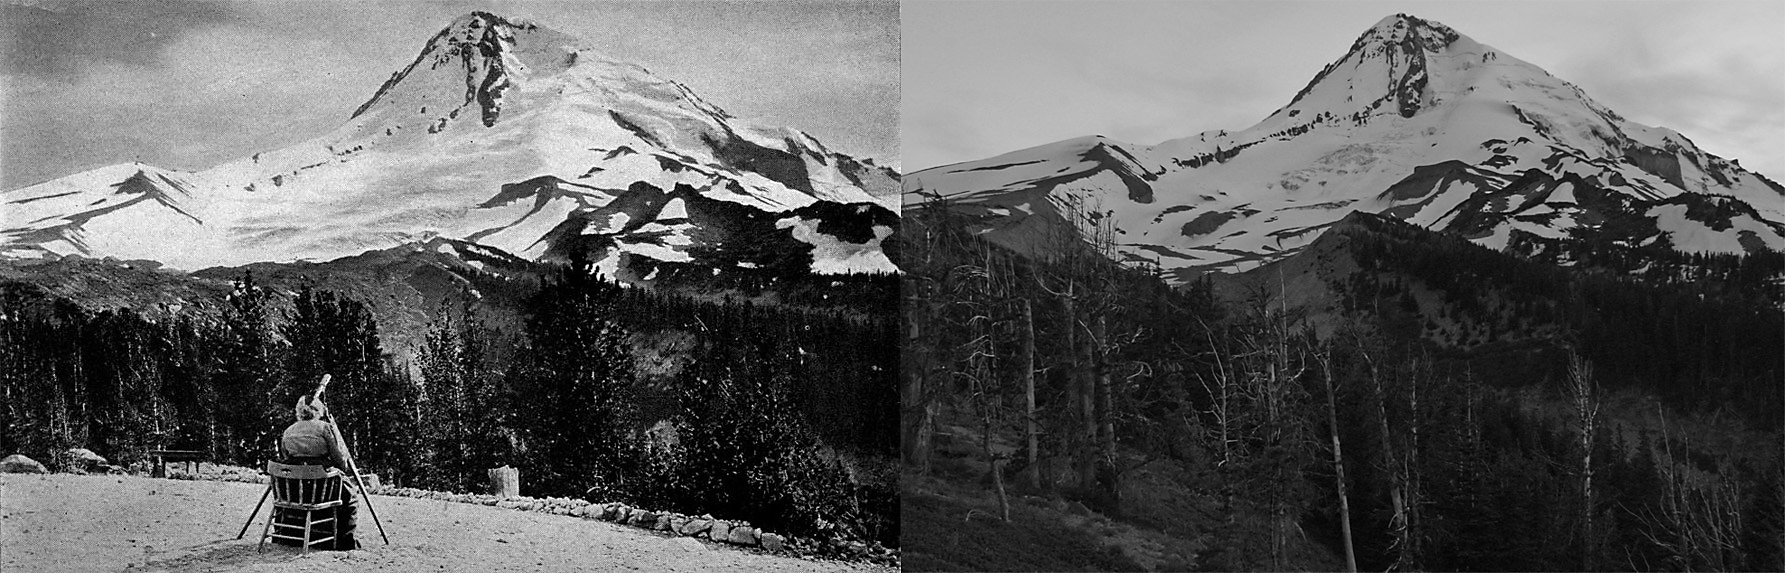 Eliot Glacier contrast from Cloud Cap